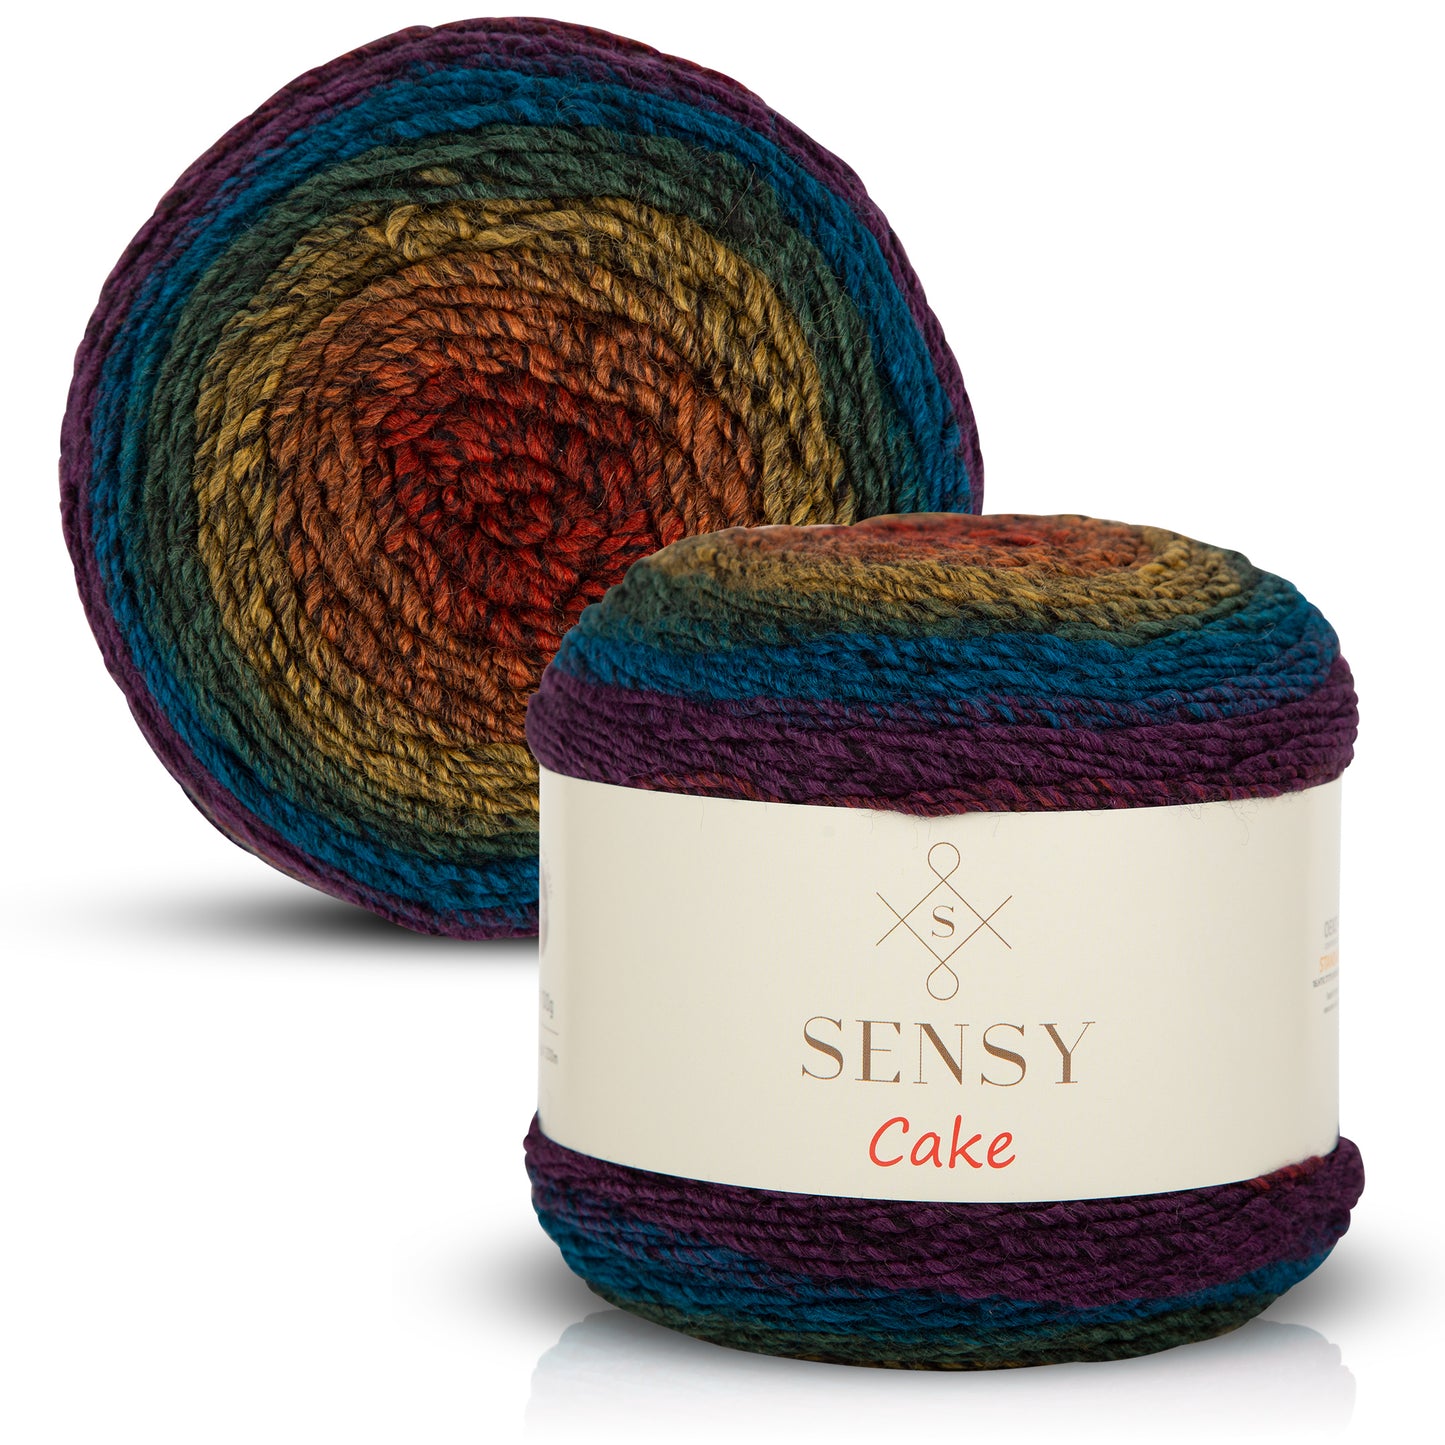 Sensy Cake Yarn, 5.3 Oz, 525 Yards, Multicolor Yarn for Crocheting